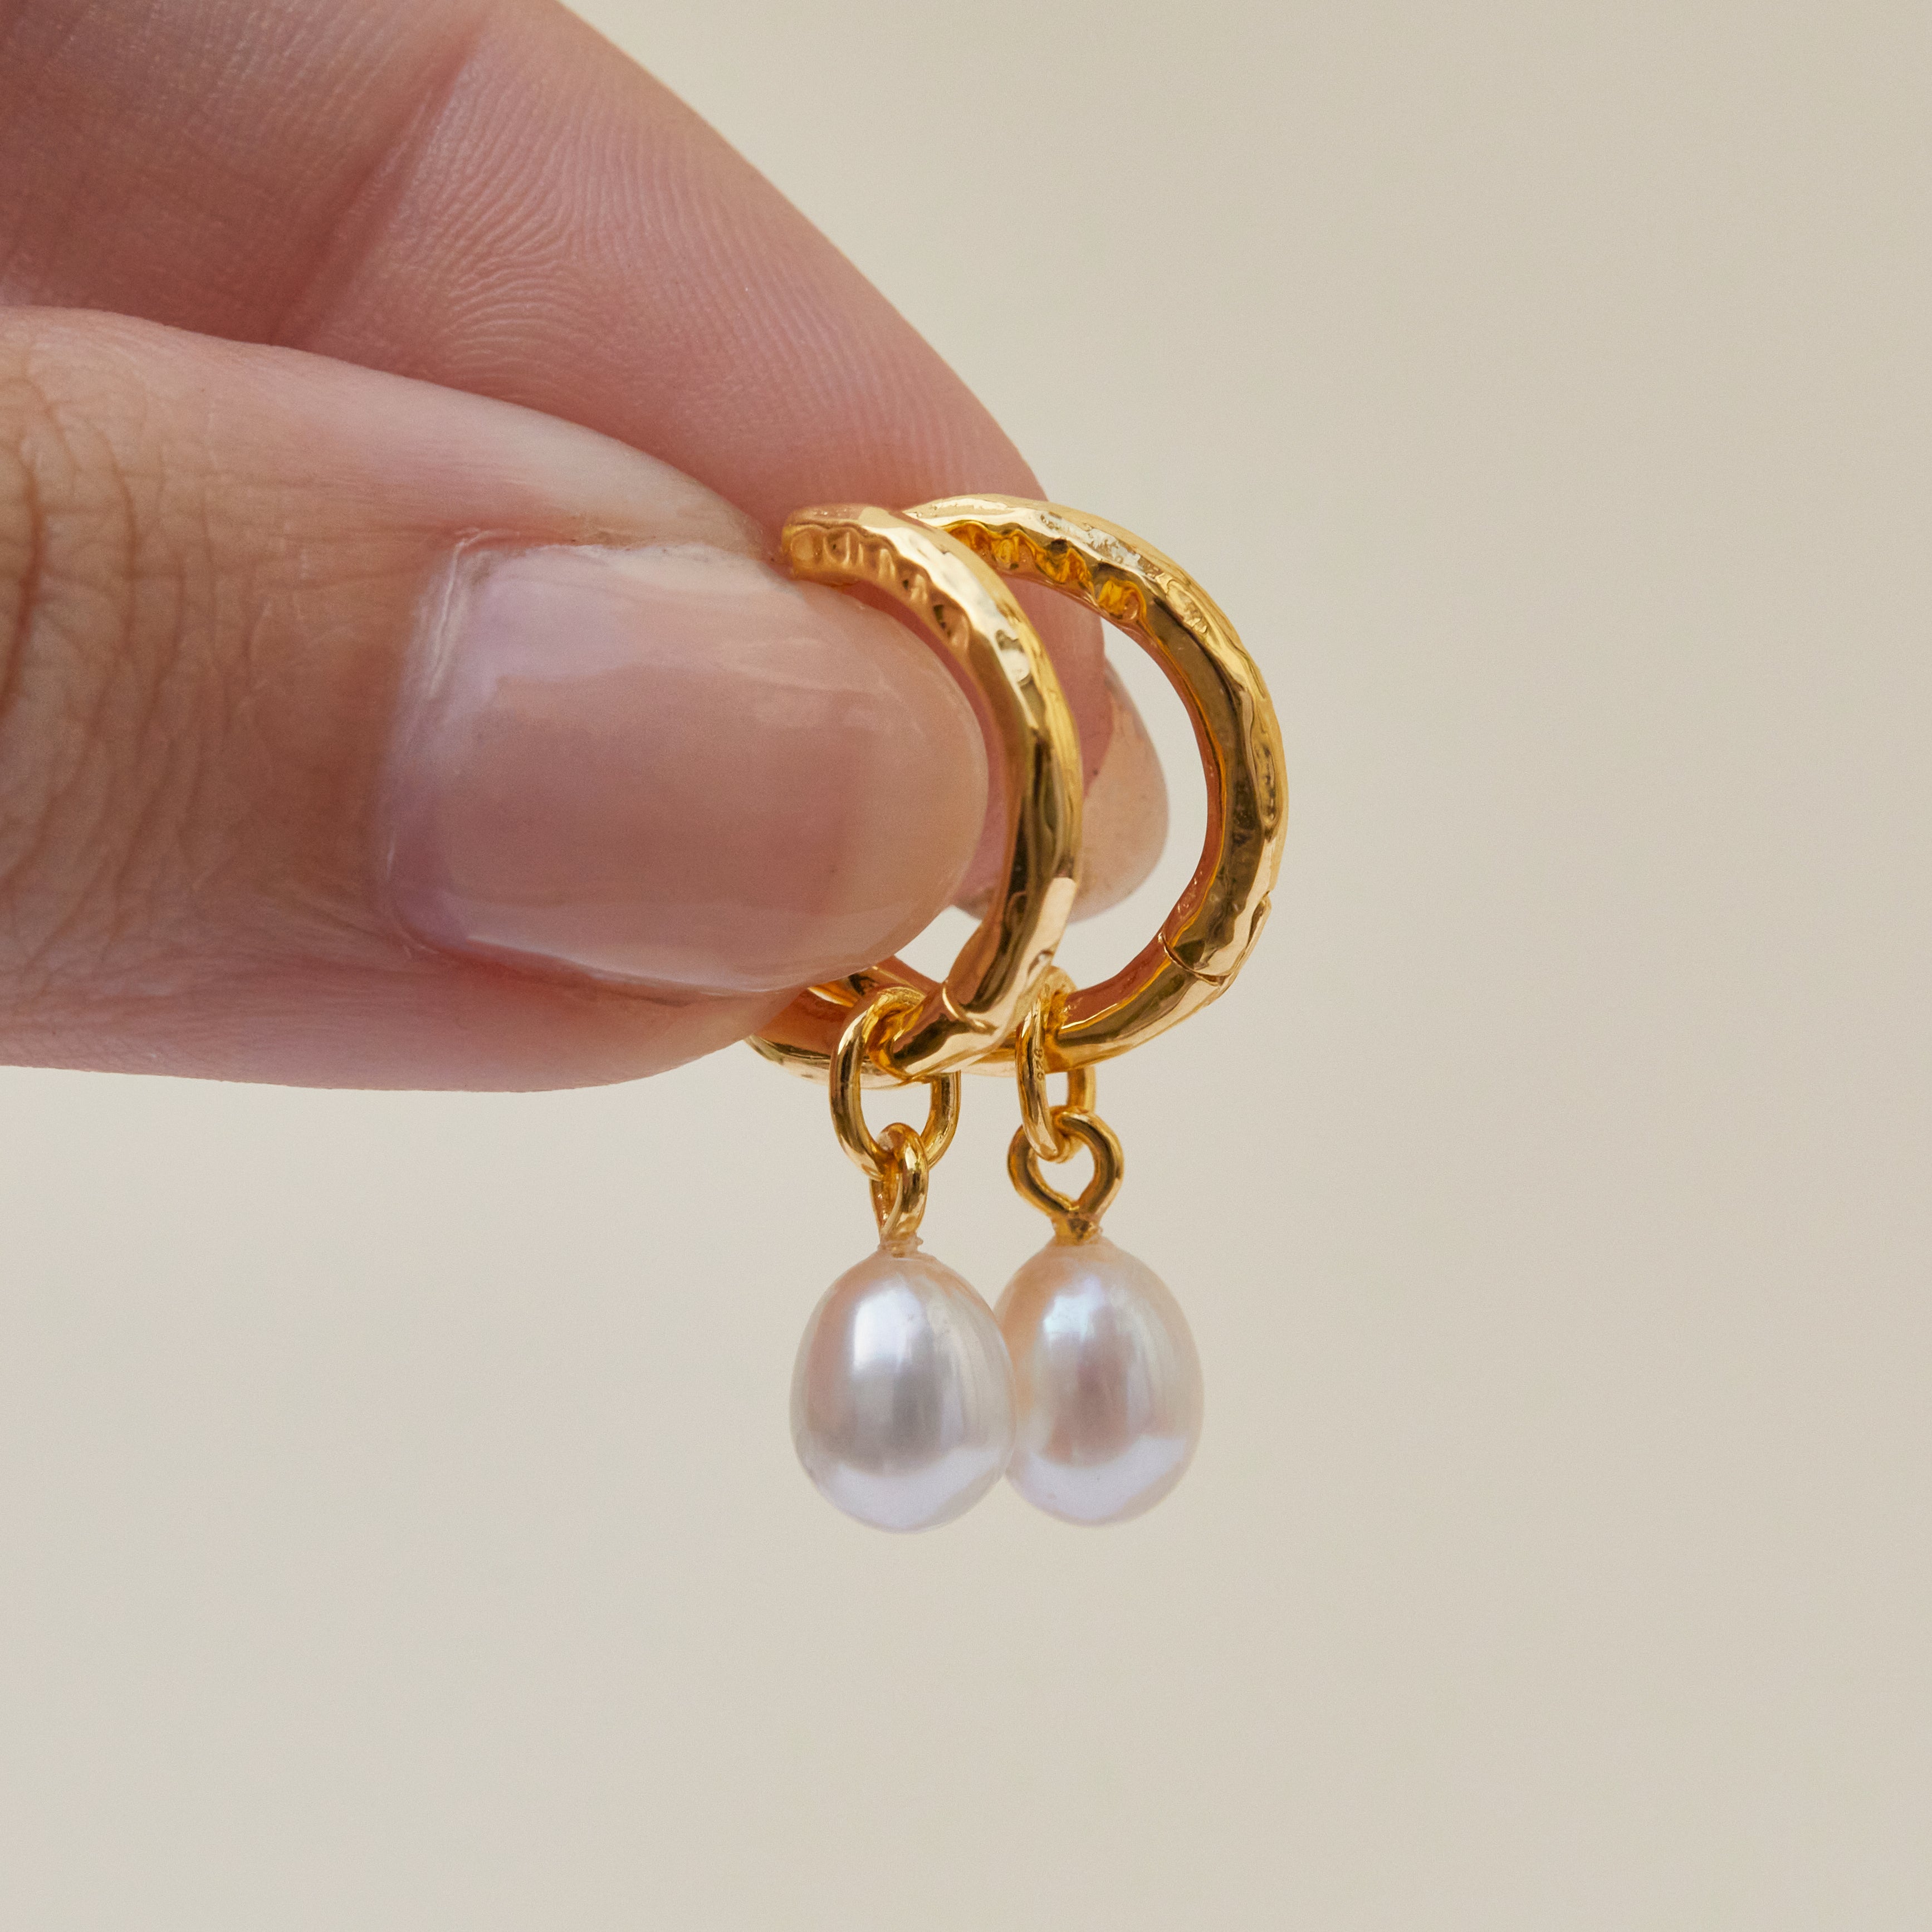 Pearl Drop Earrings in Gold Vermeil - Earrings - Carrie Elizabeth